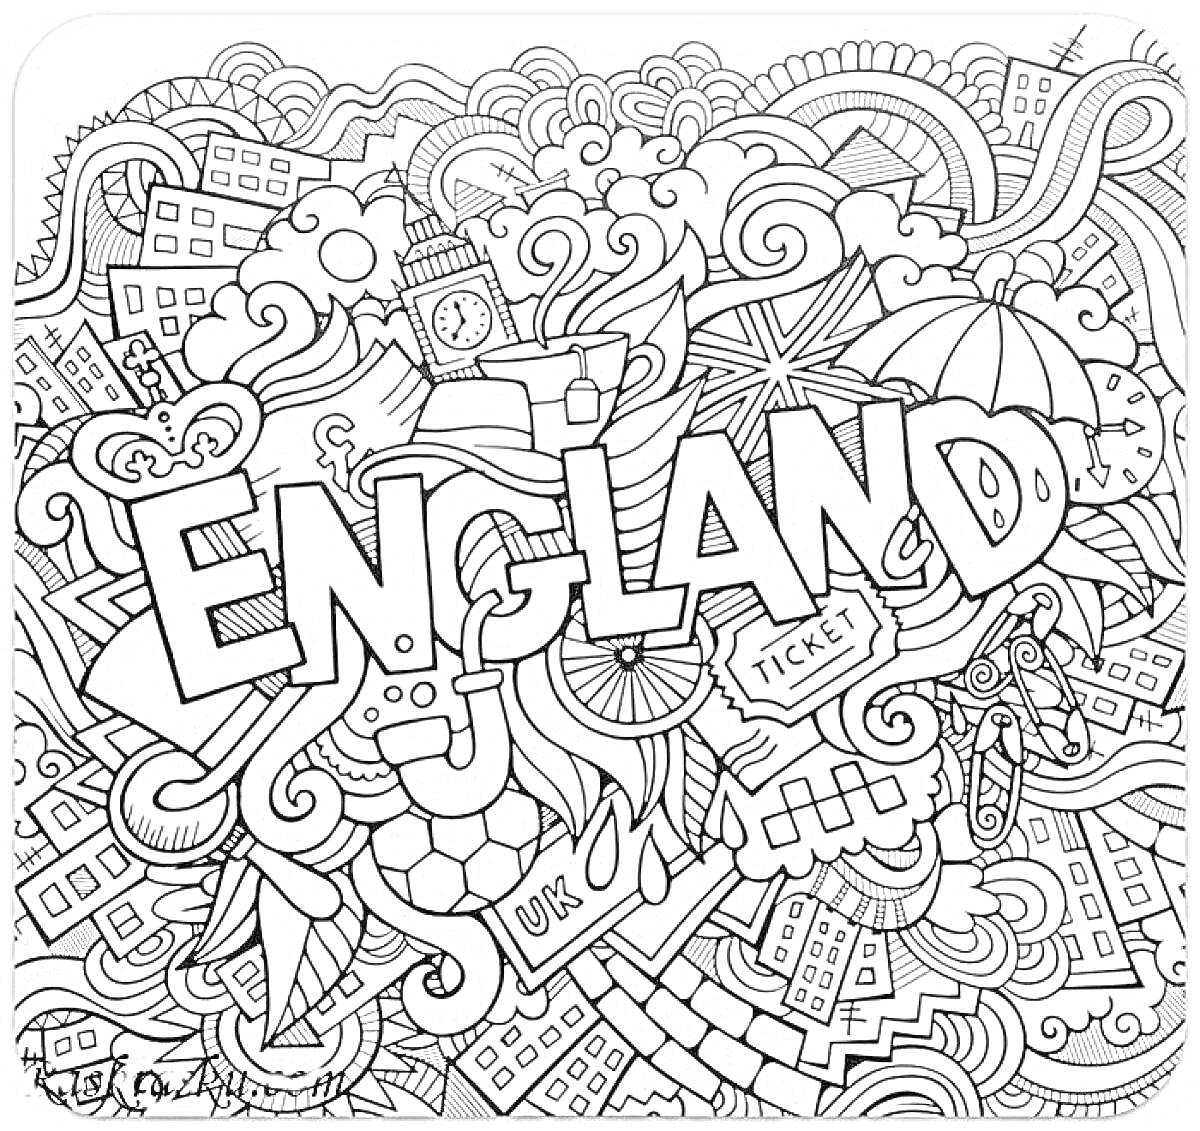 Раскраска Англия. Часы Биг-Бен, флаг, зонтик, билет, футбольный мяч, надпись ENG, улицы, здания, чайник, корона, облака